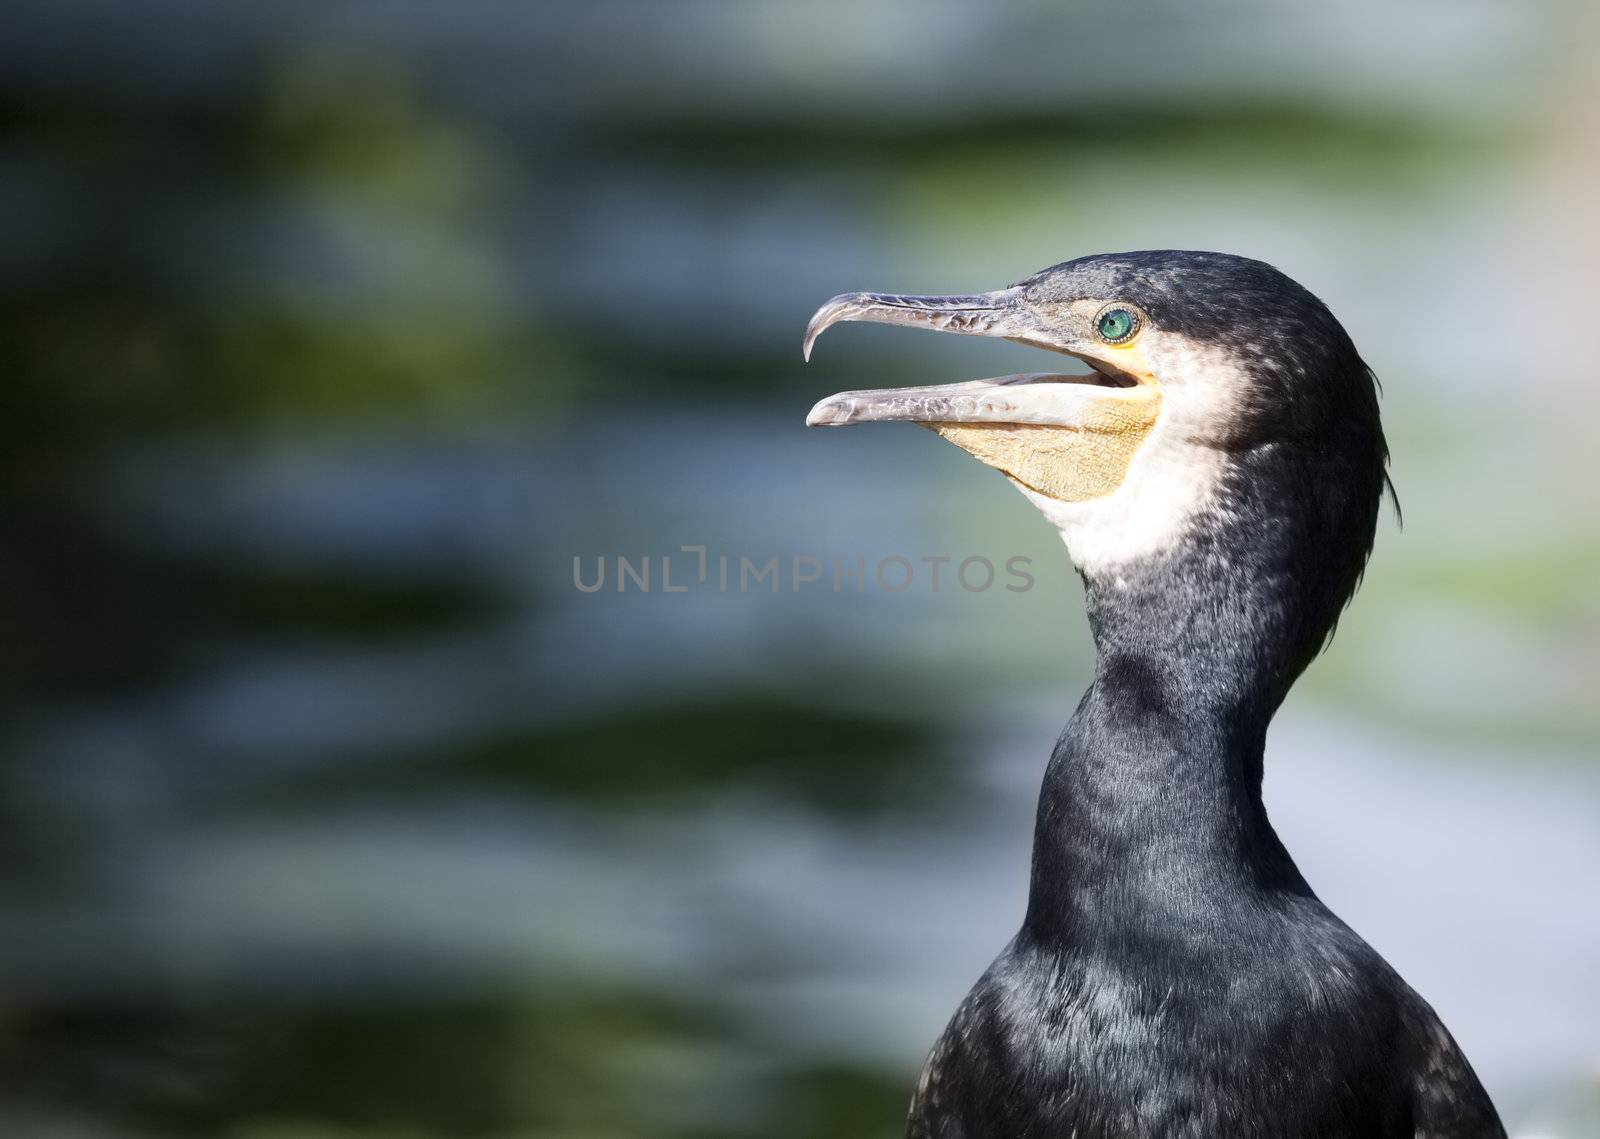 An image of a beautiful cormorant bird